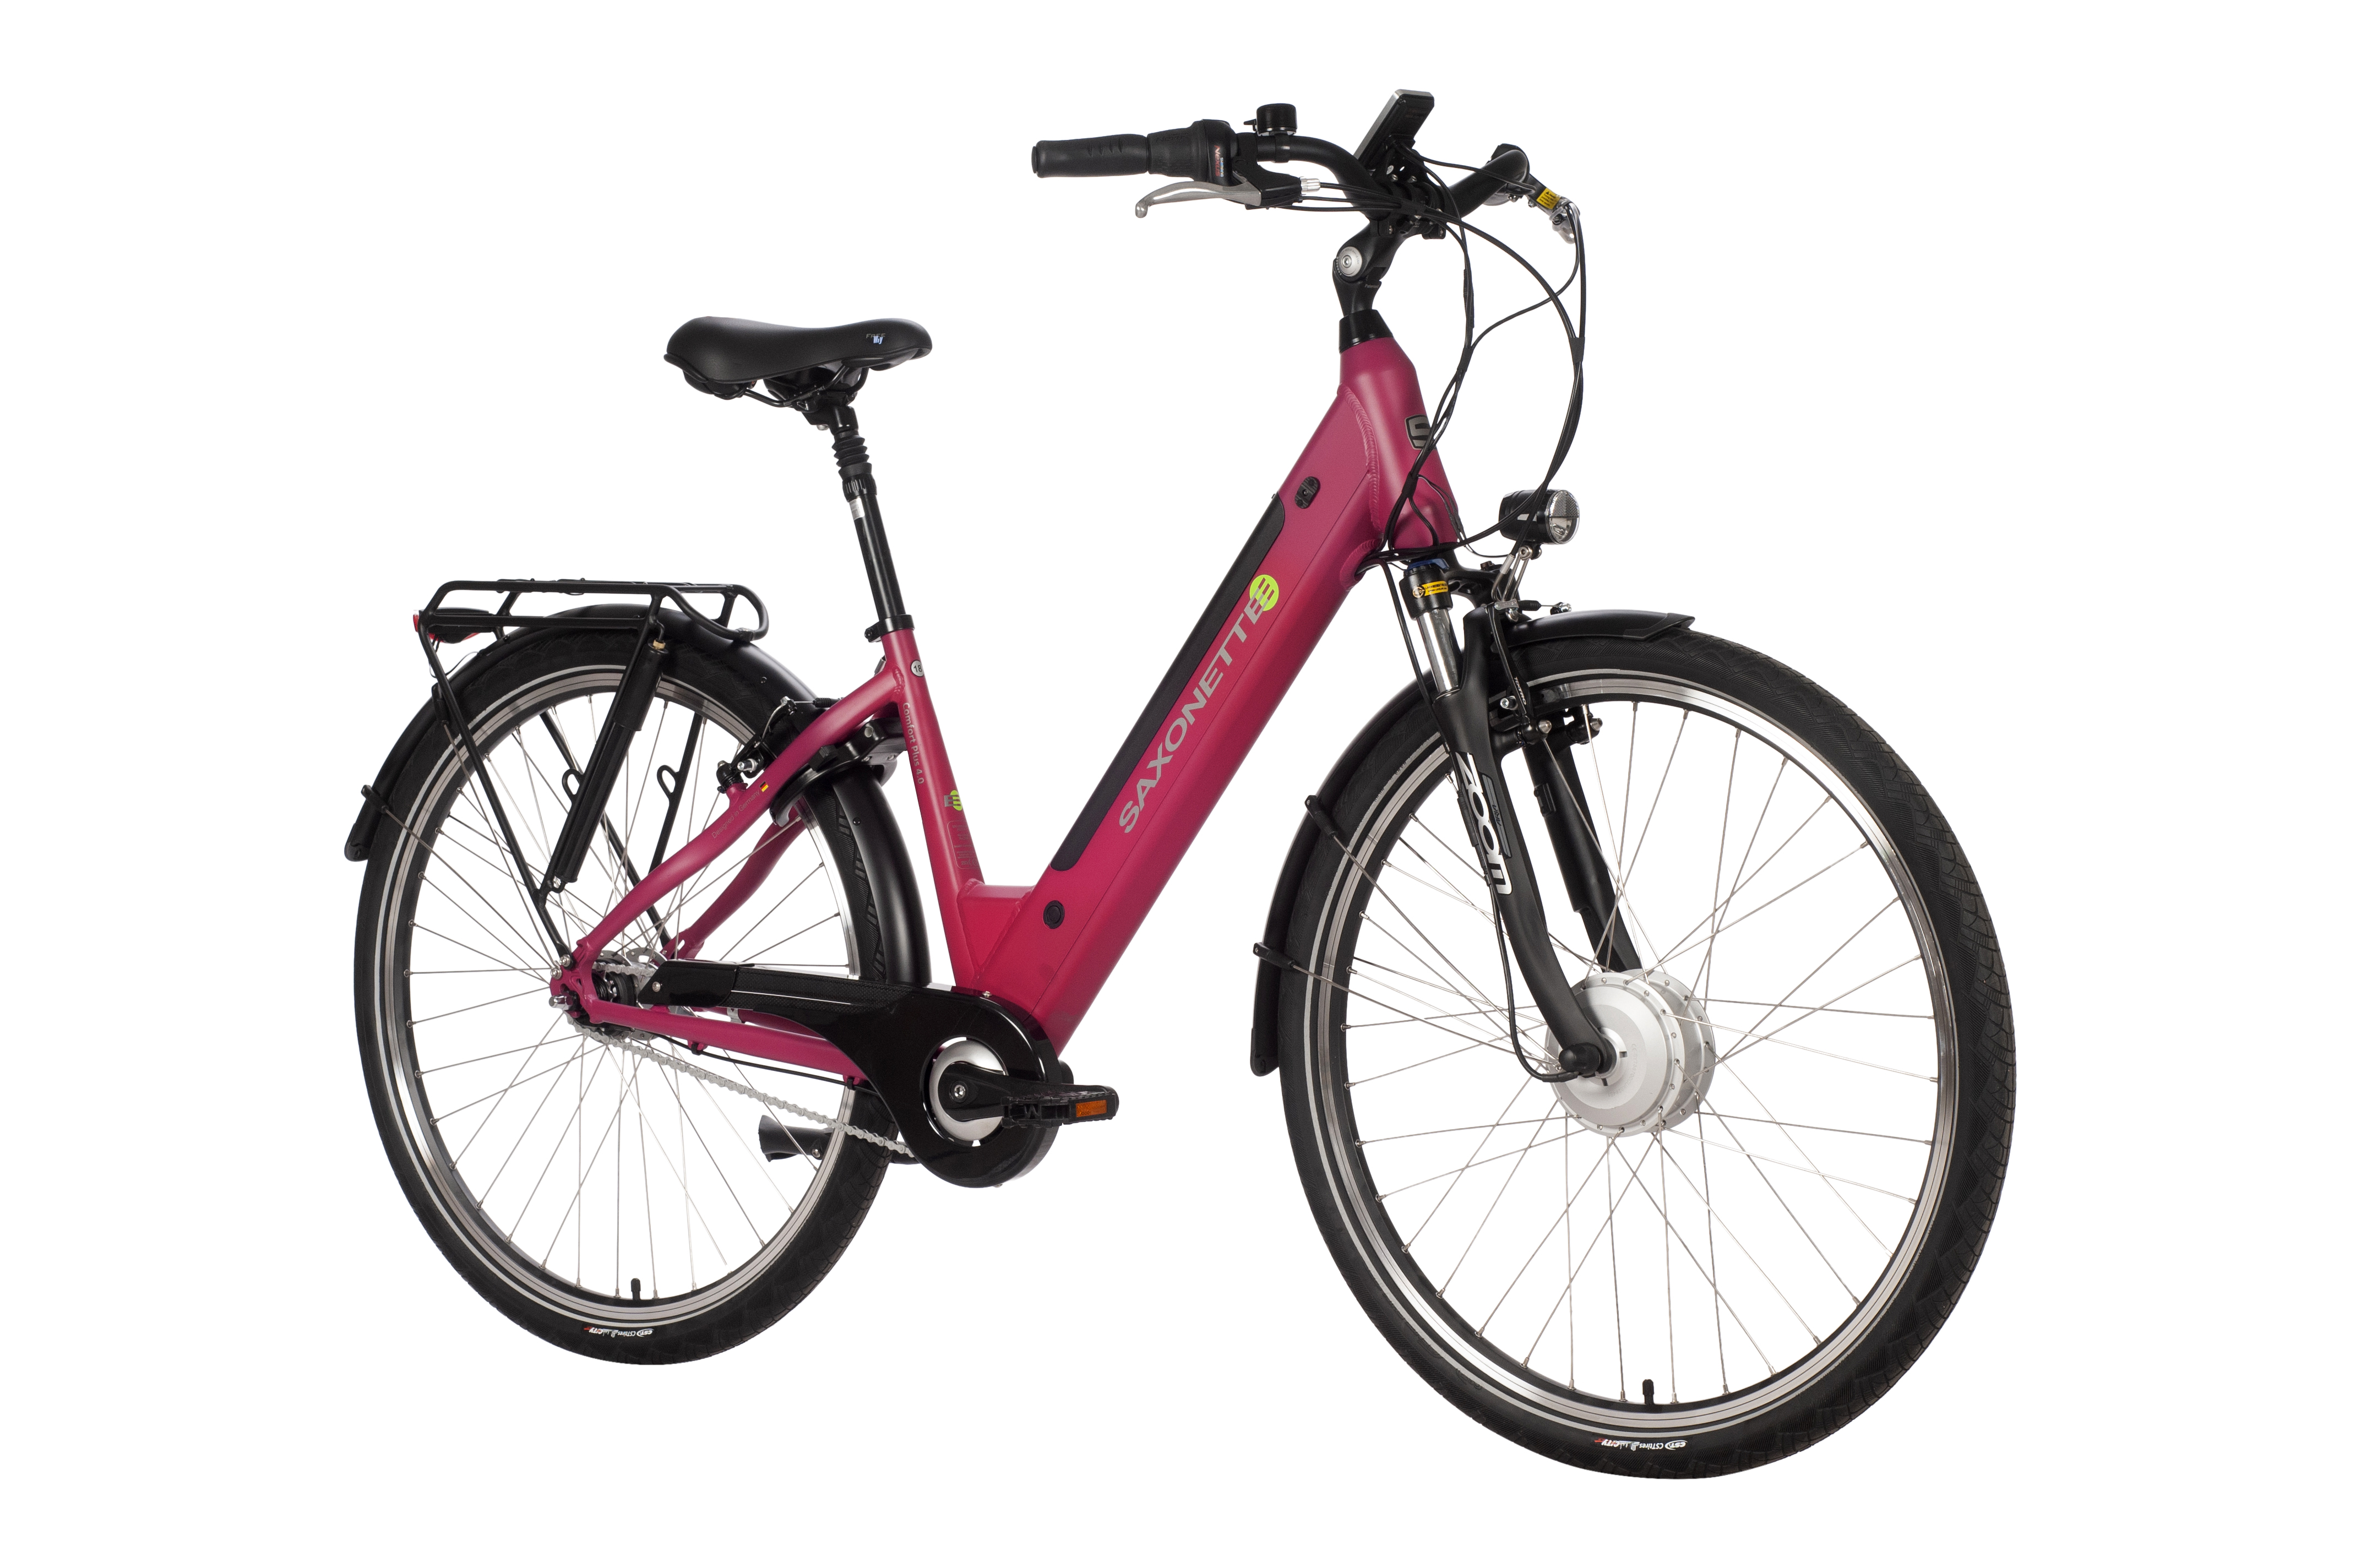 SAXONETTE Comfort Plus 4.0 E-Trekkingbike Federgabel Vorderradmotor 7 Gang 2. Wahl gebraucht Wave beere matt